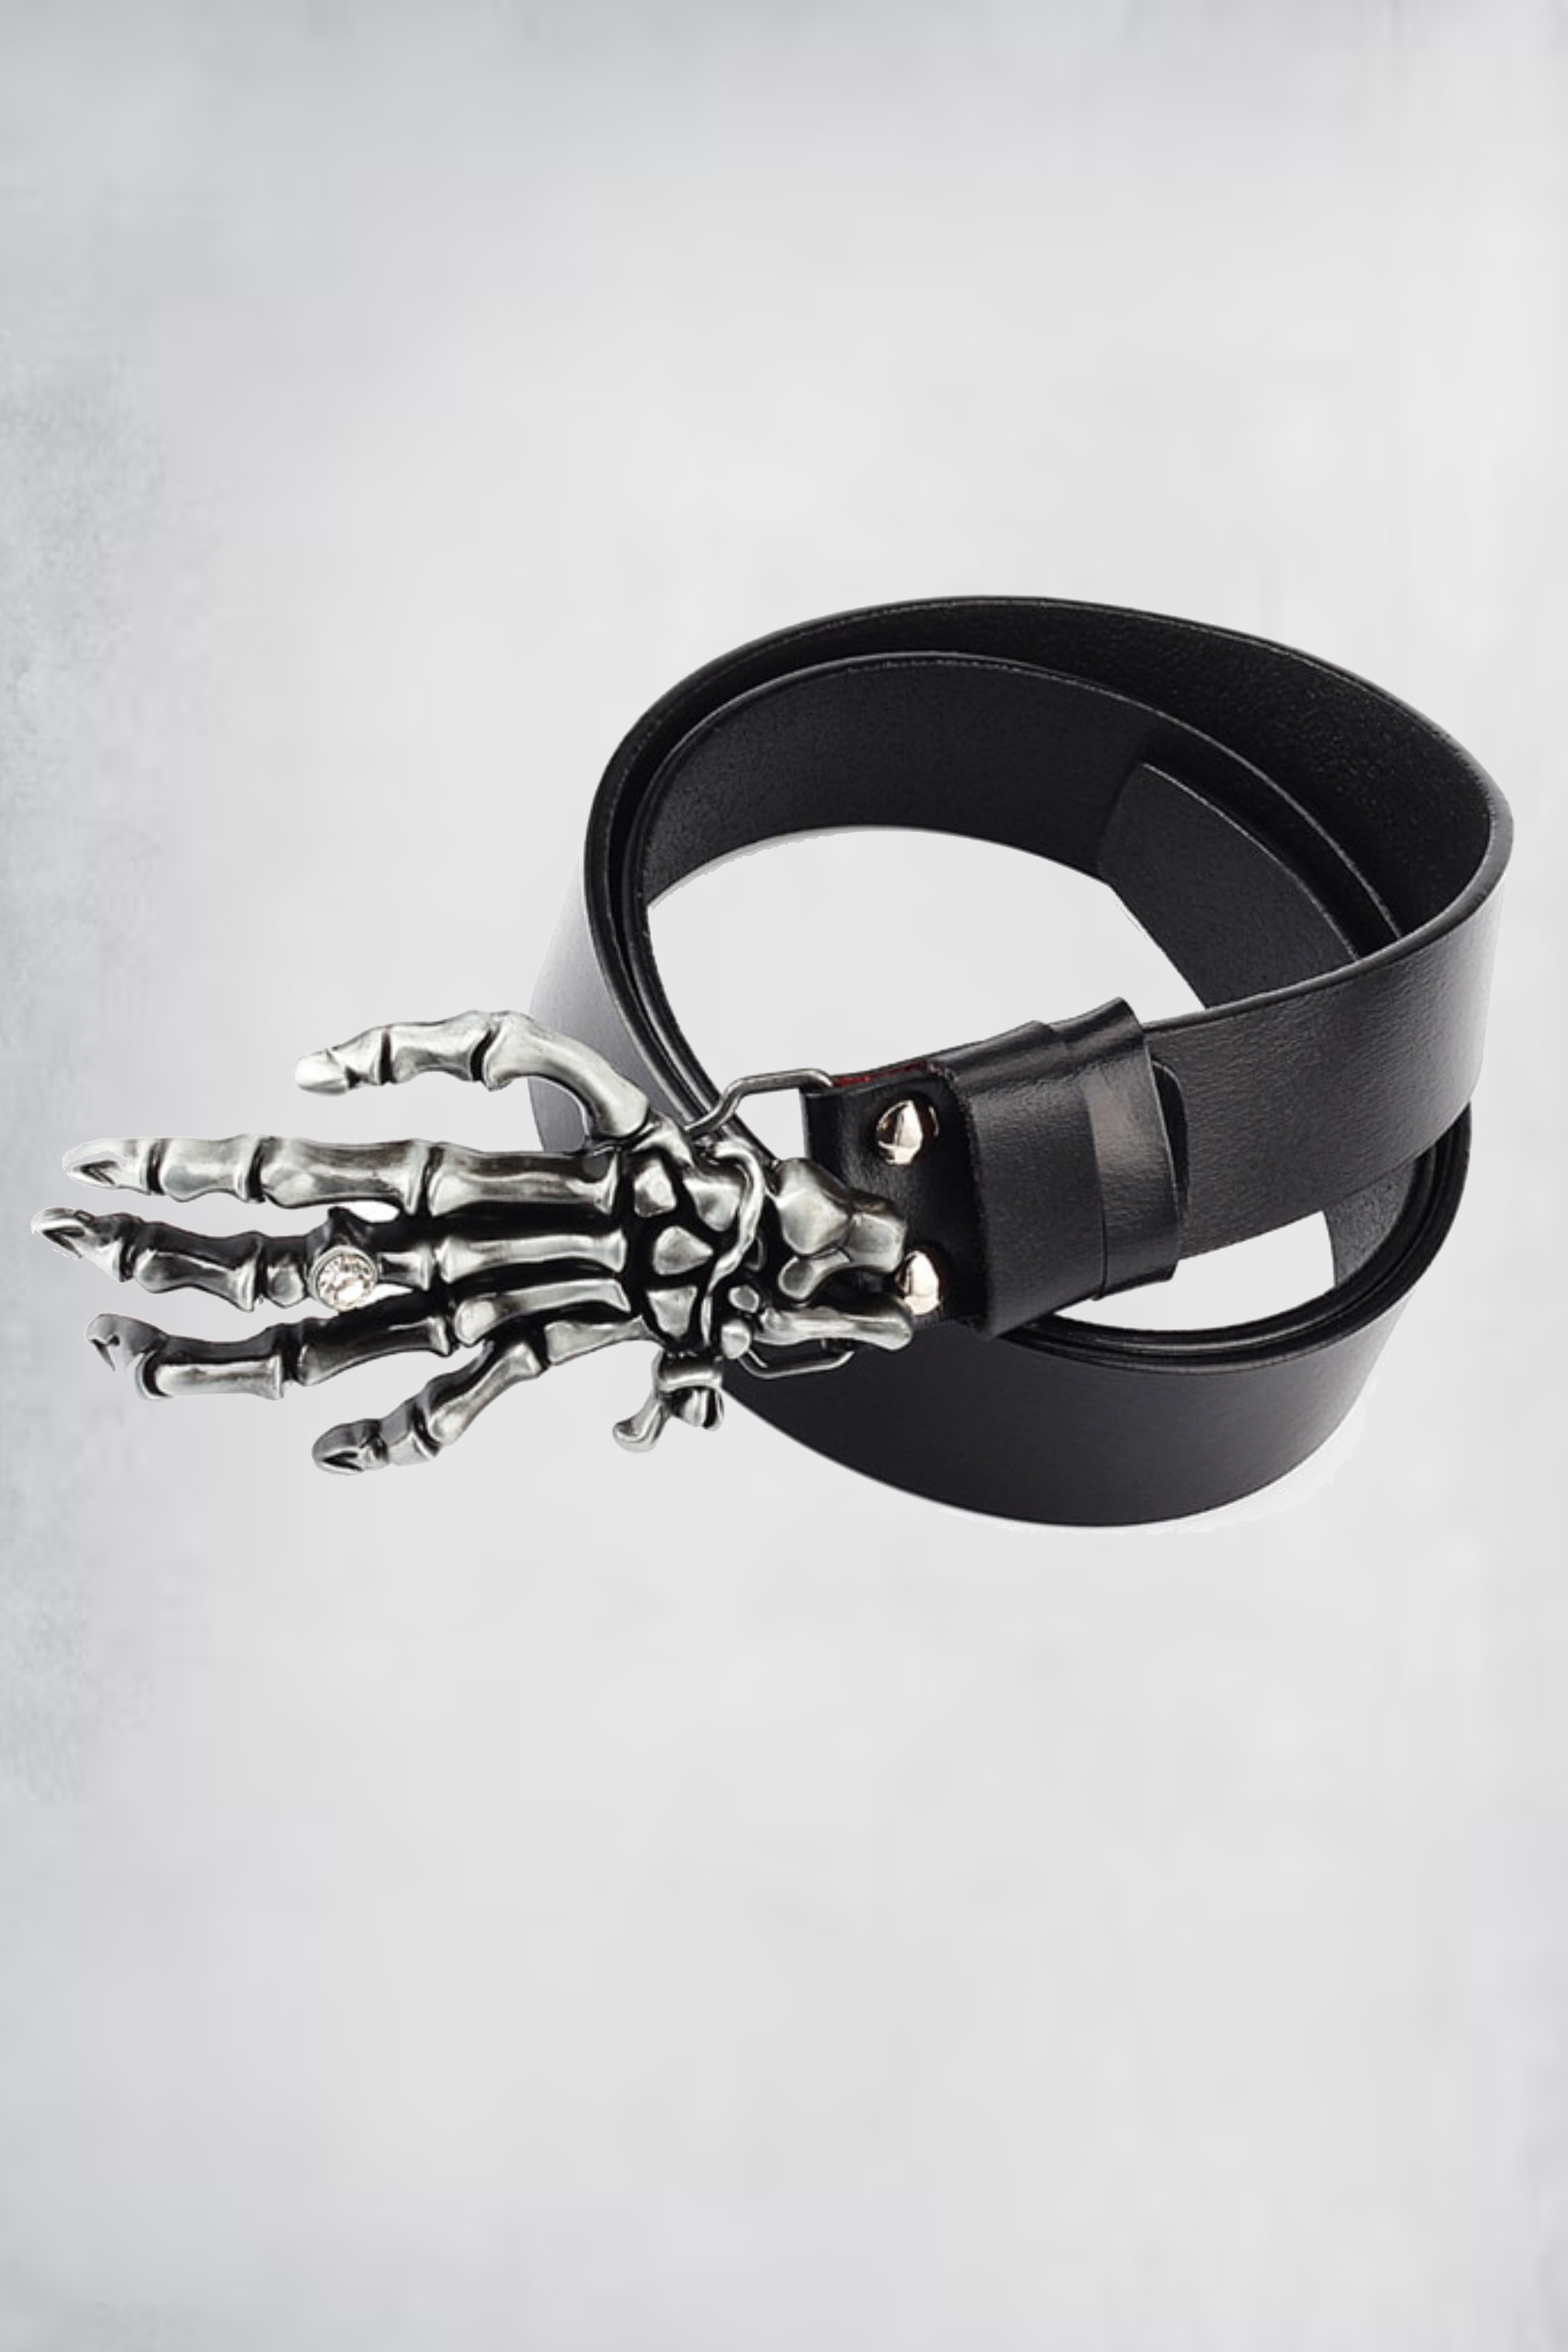 Skeleton hand belt